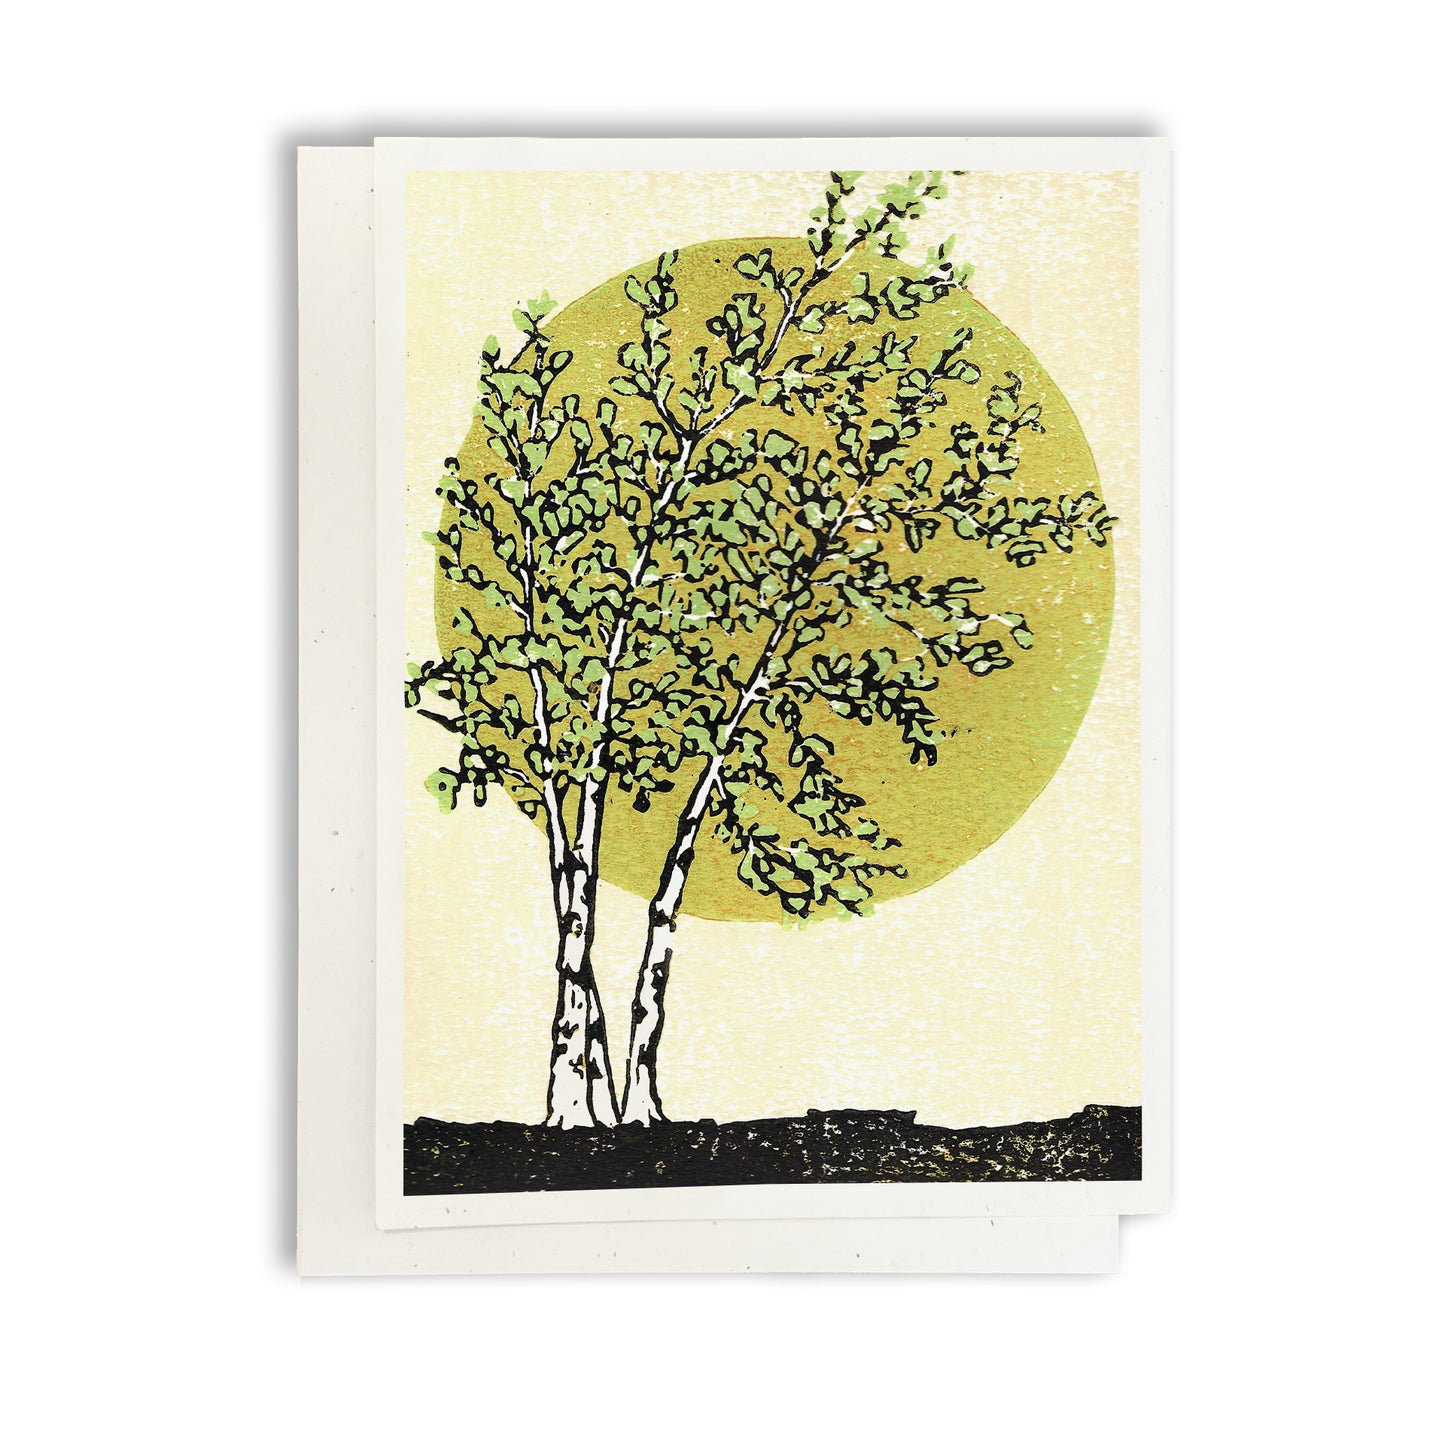 Radiant Birches greeting card by Natalia Wohletz of Peninsula Prints.